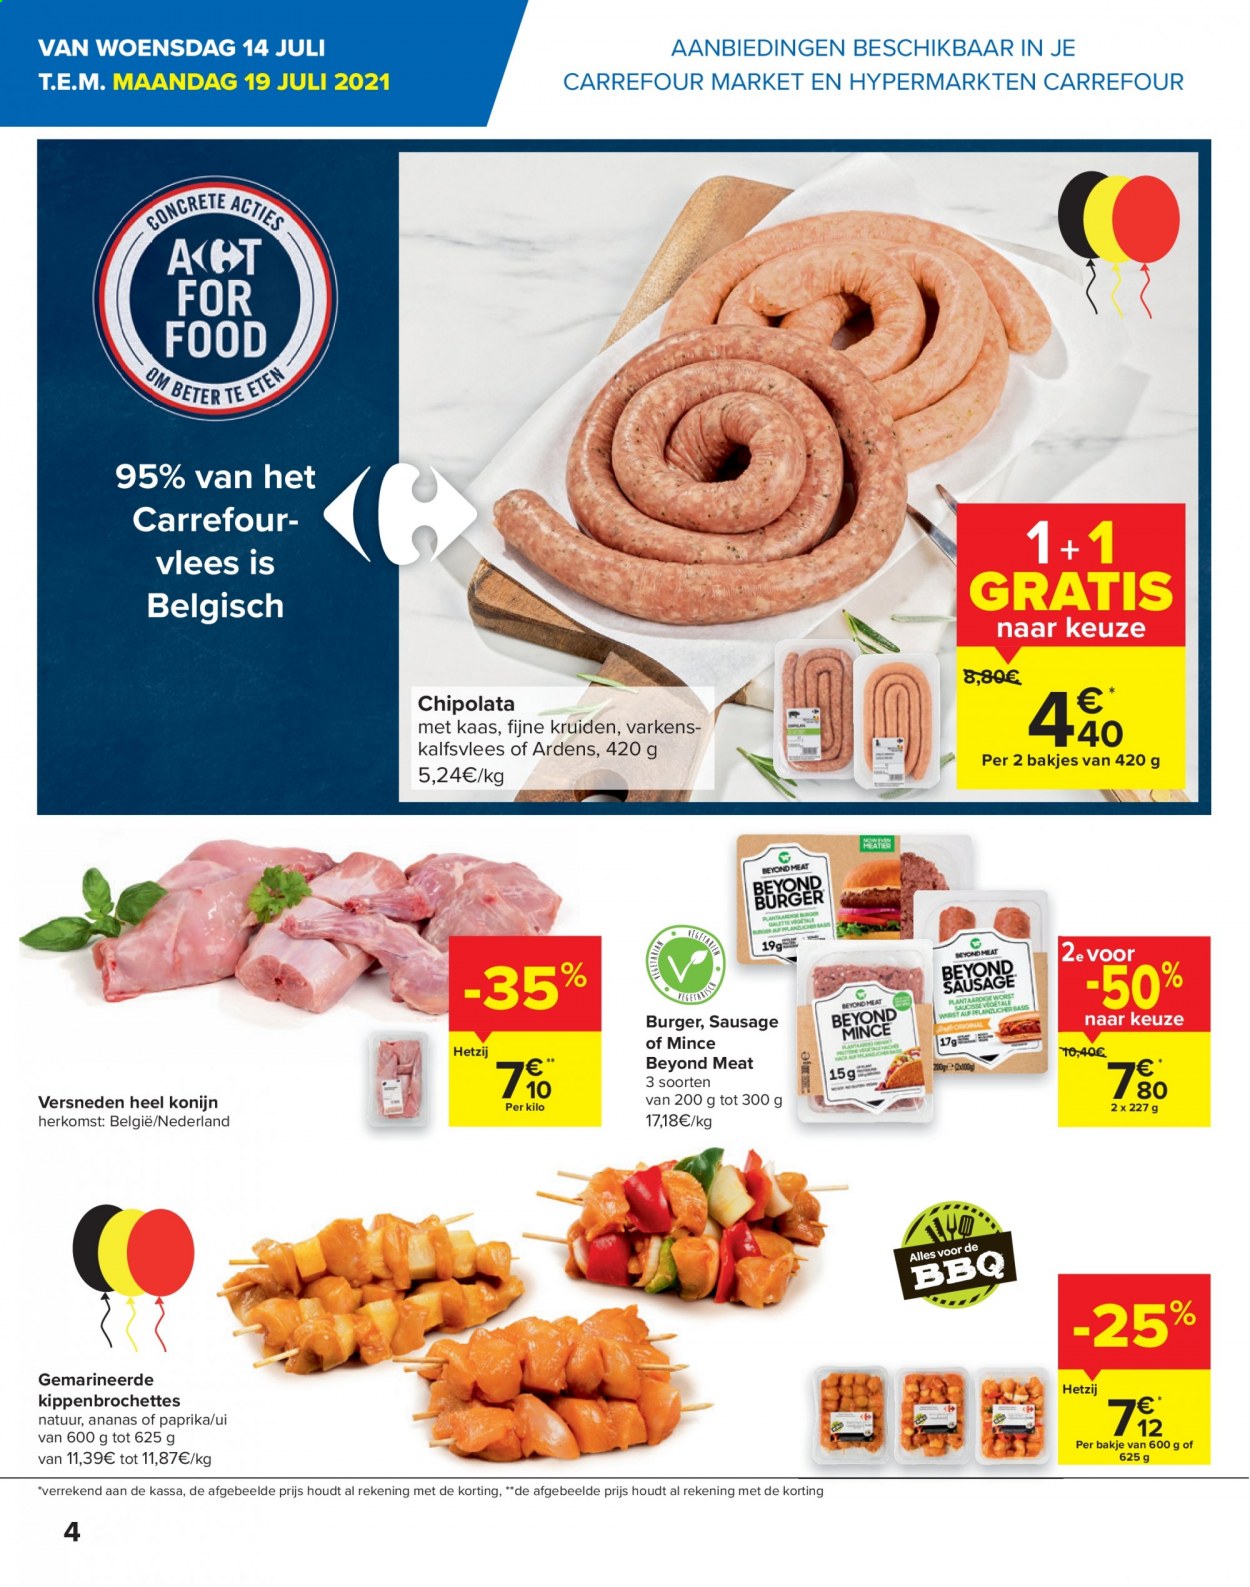 thumbnail - Carrefour-aanbieding - 14/07/2021 - 26/07/2021 -  producten in de aanbieding - chipolataworstjes, kaas, konijn, uien, ananas, BBQ. Pagina 4.